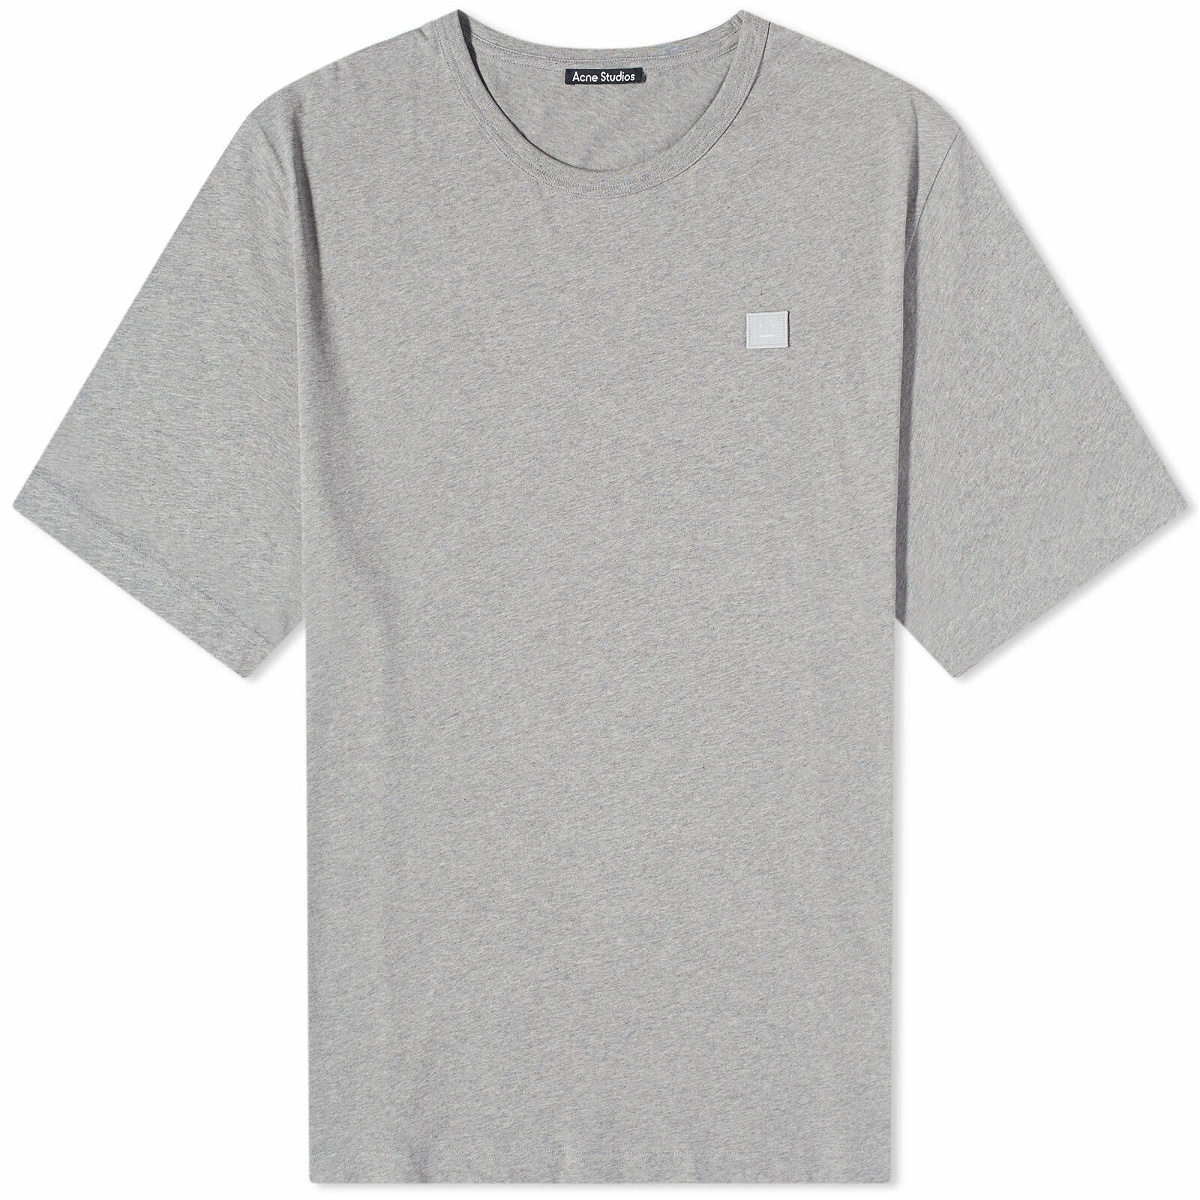 Acne Studios Exford Face T-Shirt in Light Grey Melange Acne Studios